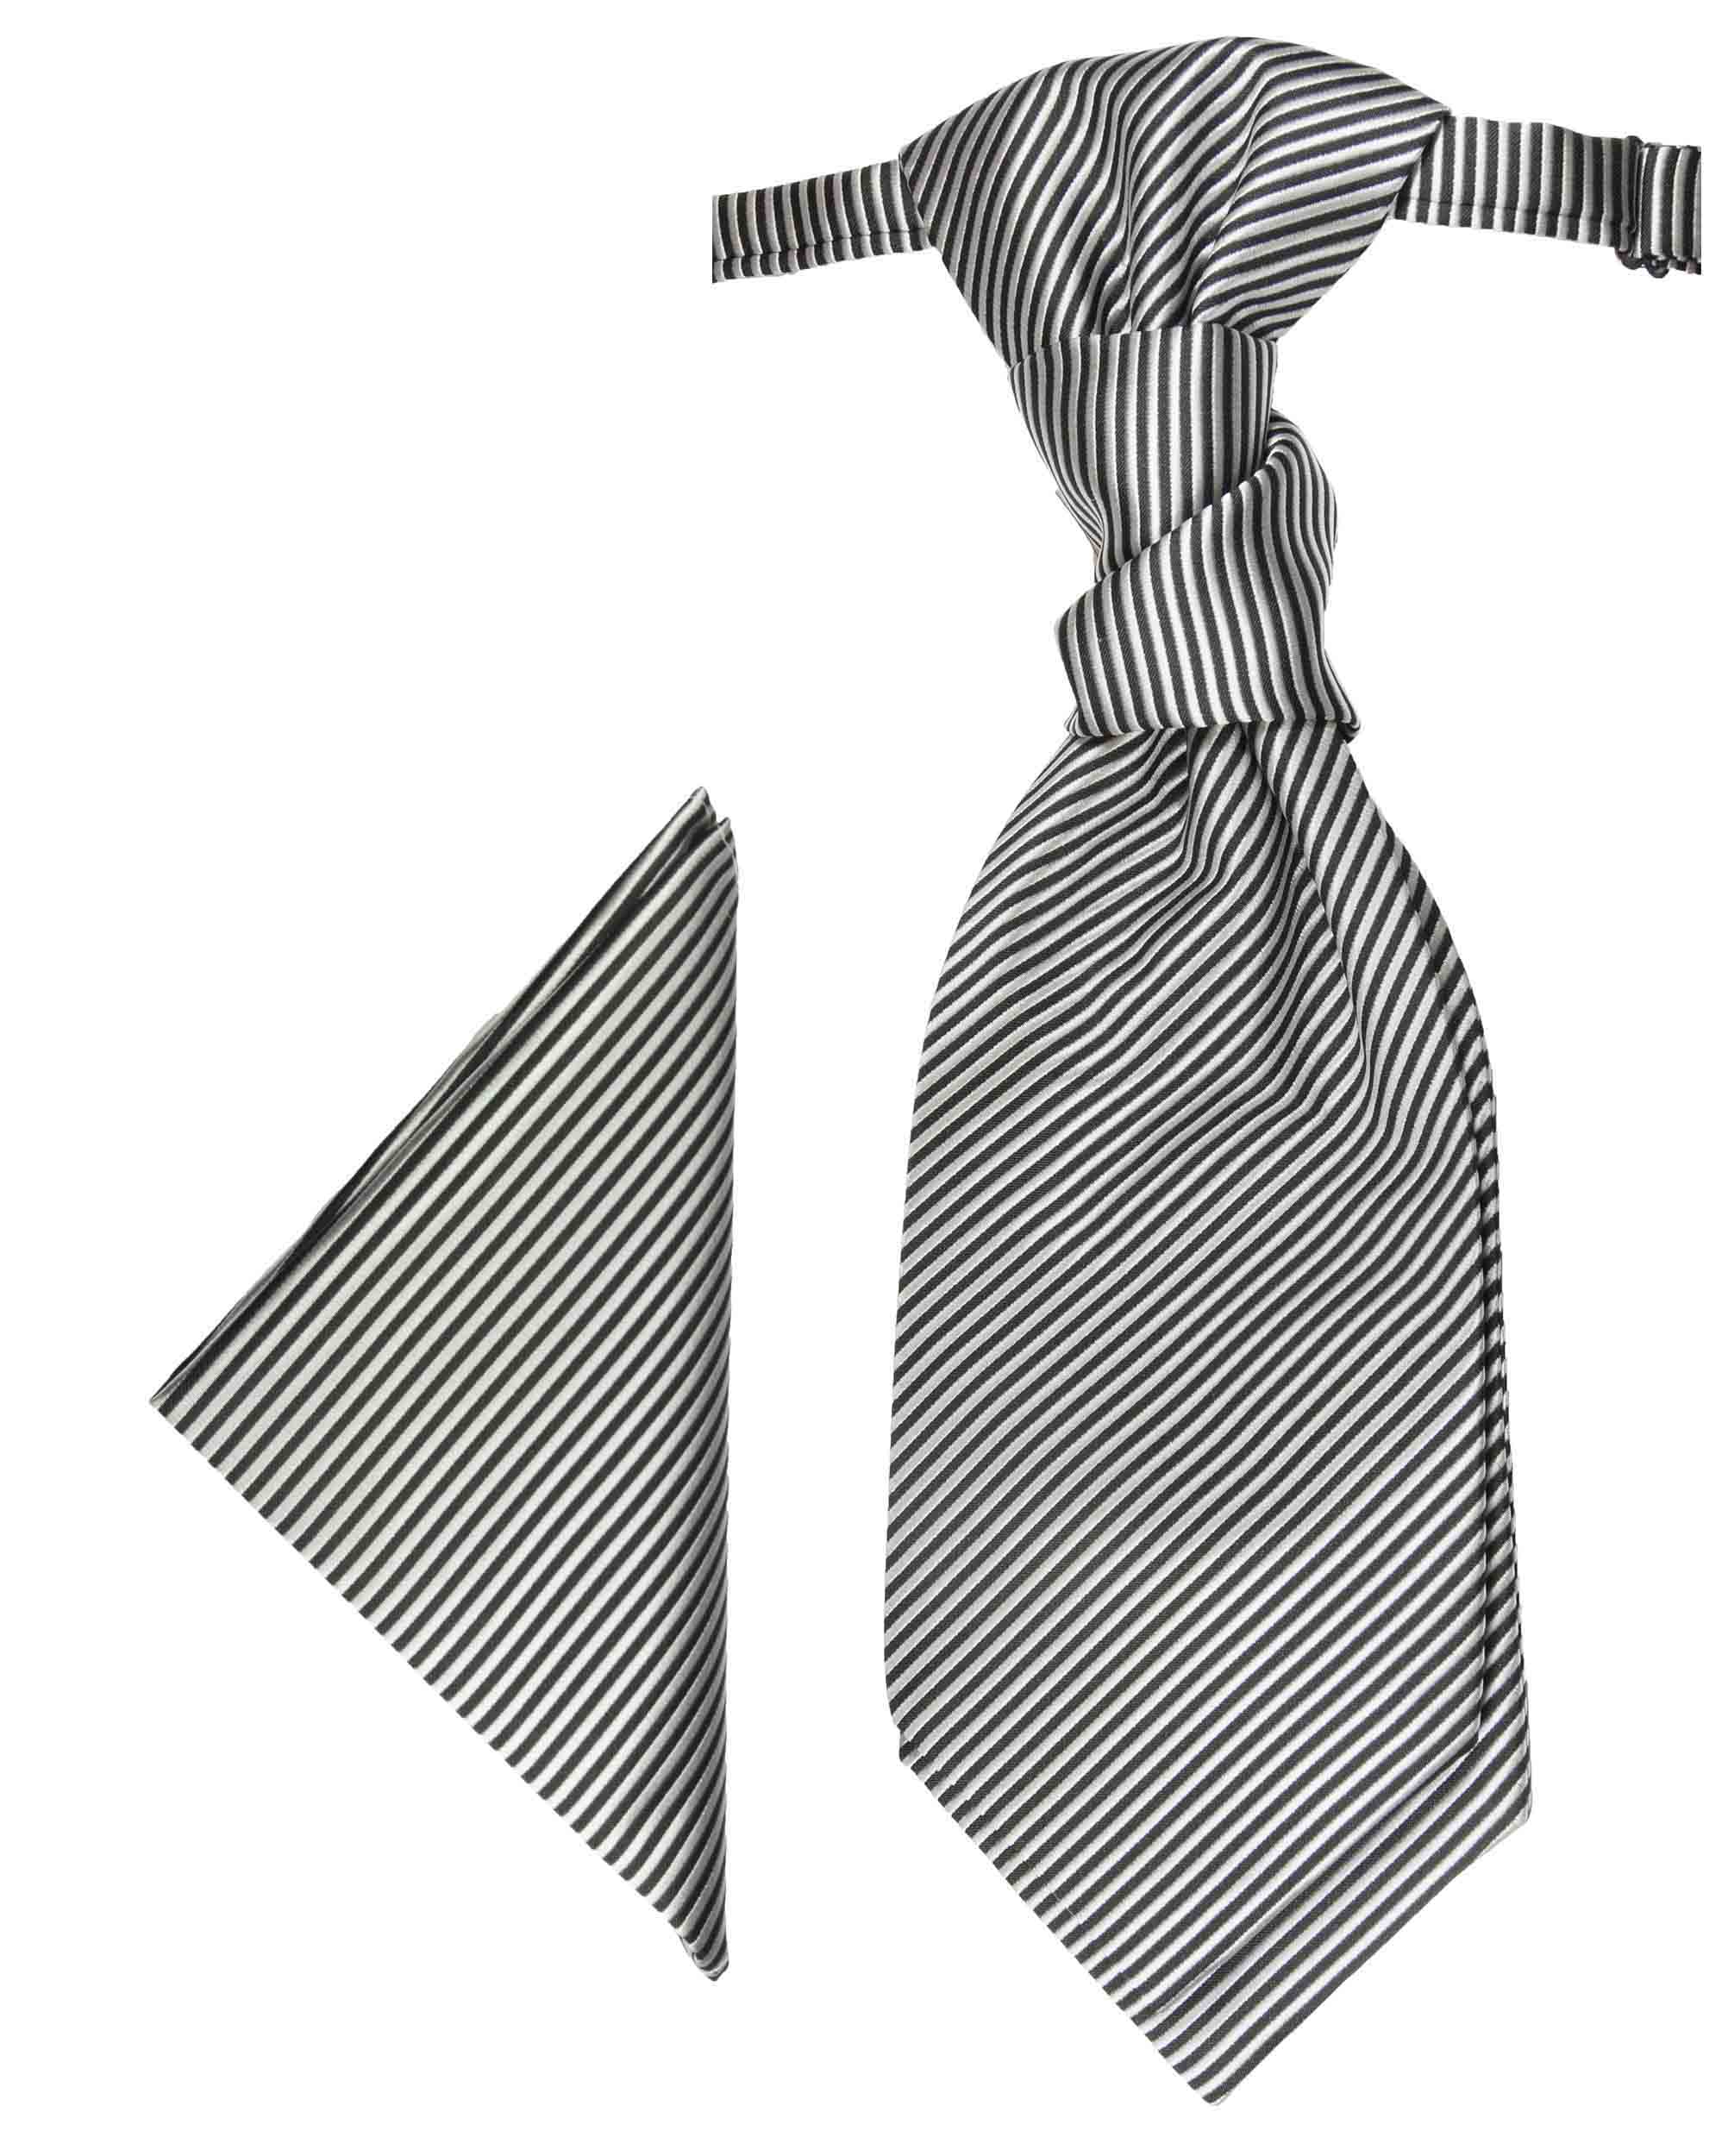 USED Cravat Necktie Pretied BLACK/SILVER STRIPE SC803 